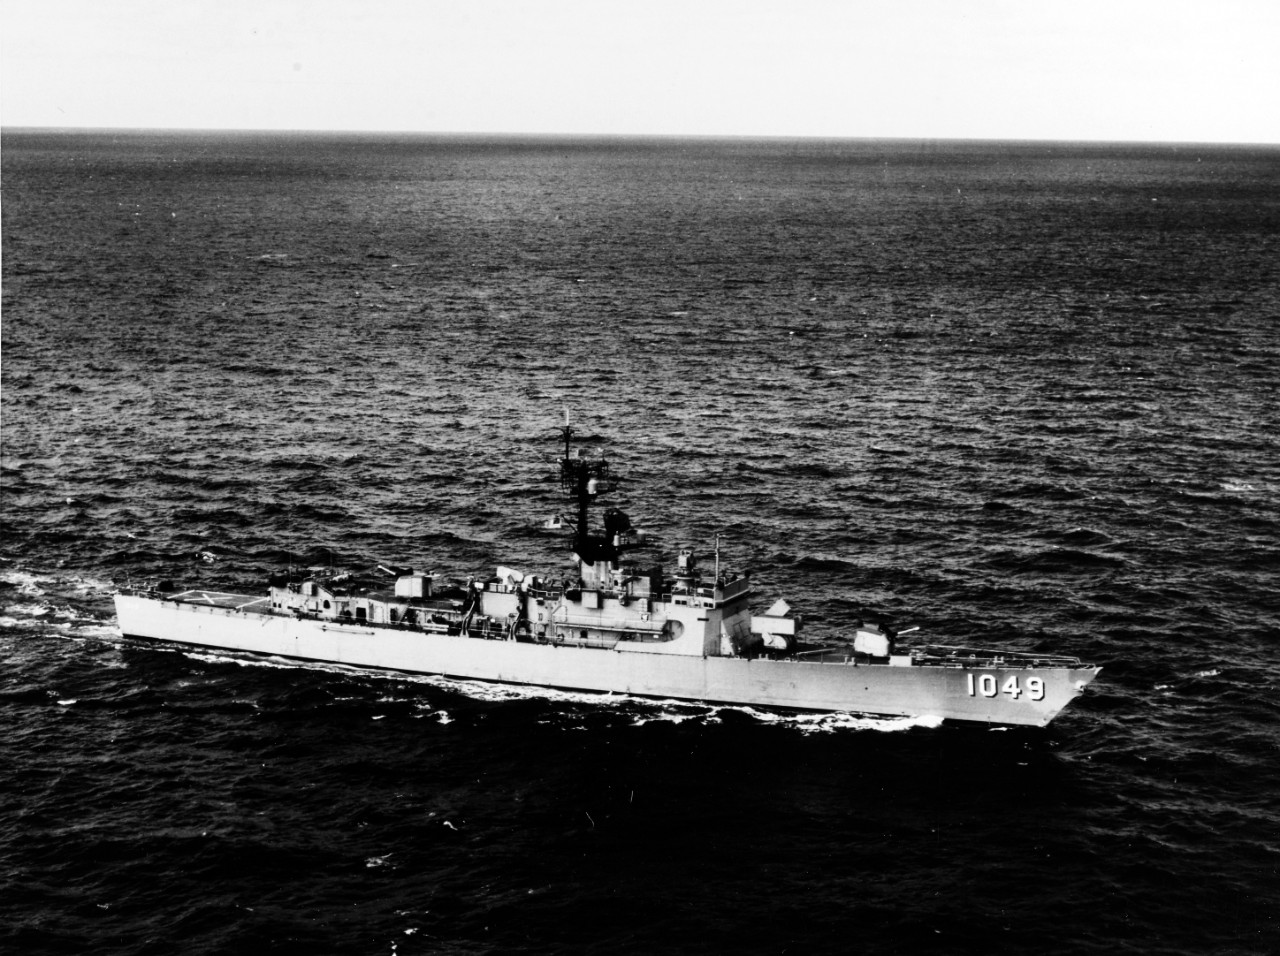 USS KOELSCH (DE-1049)